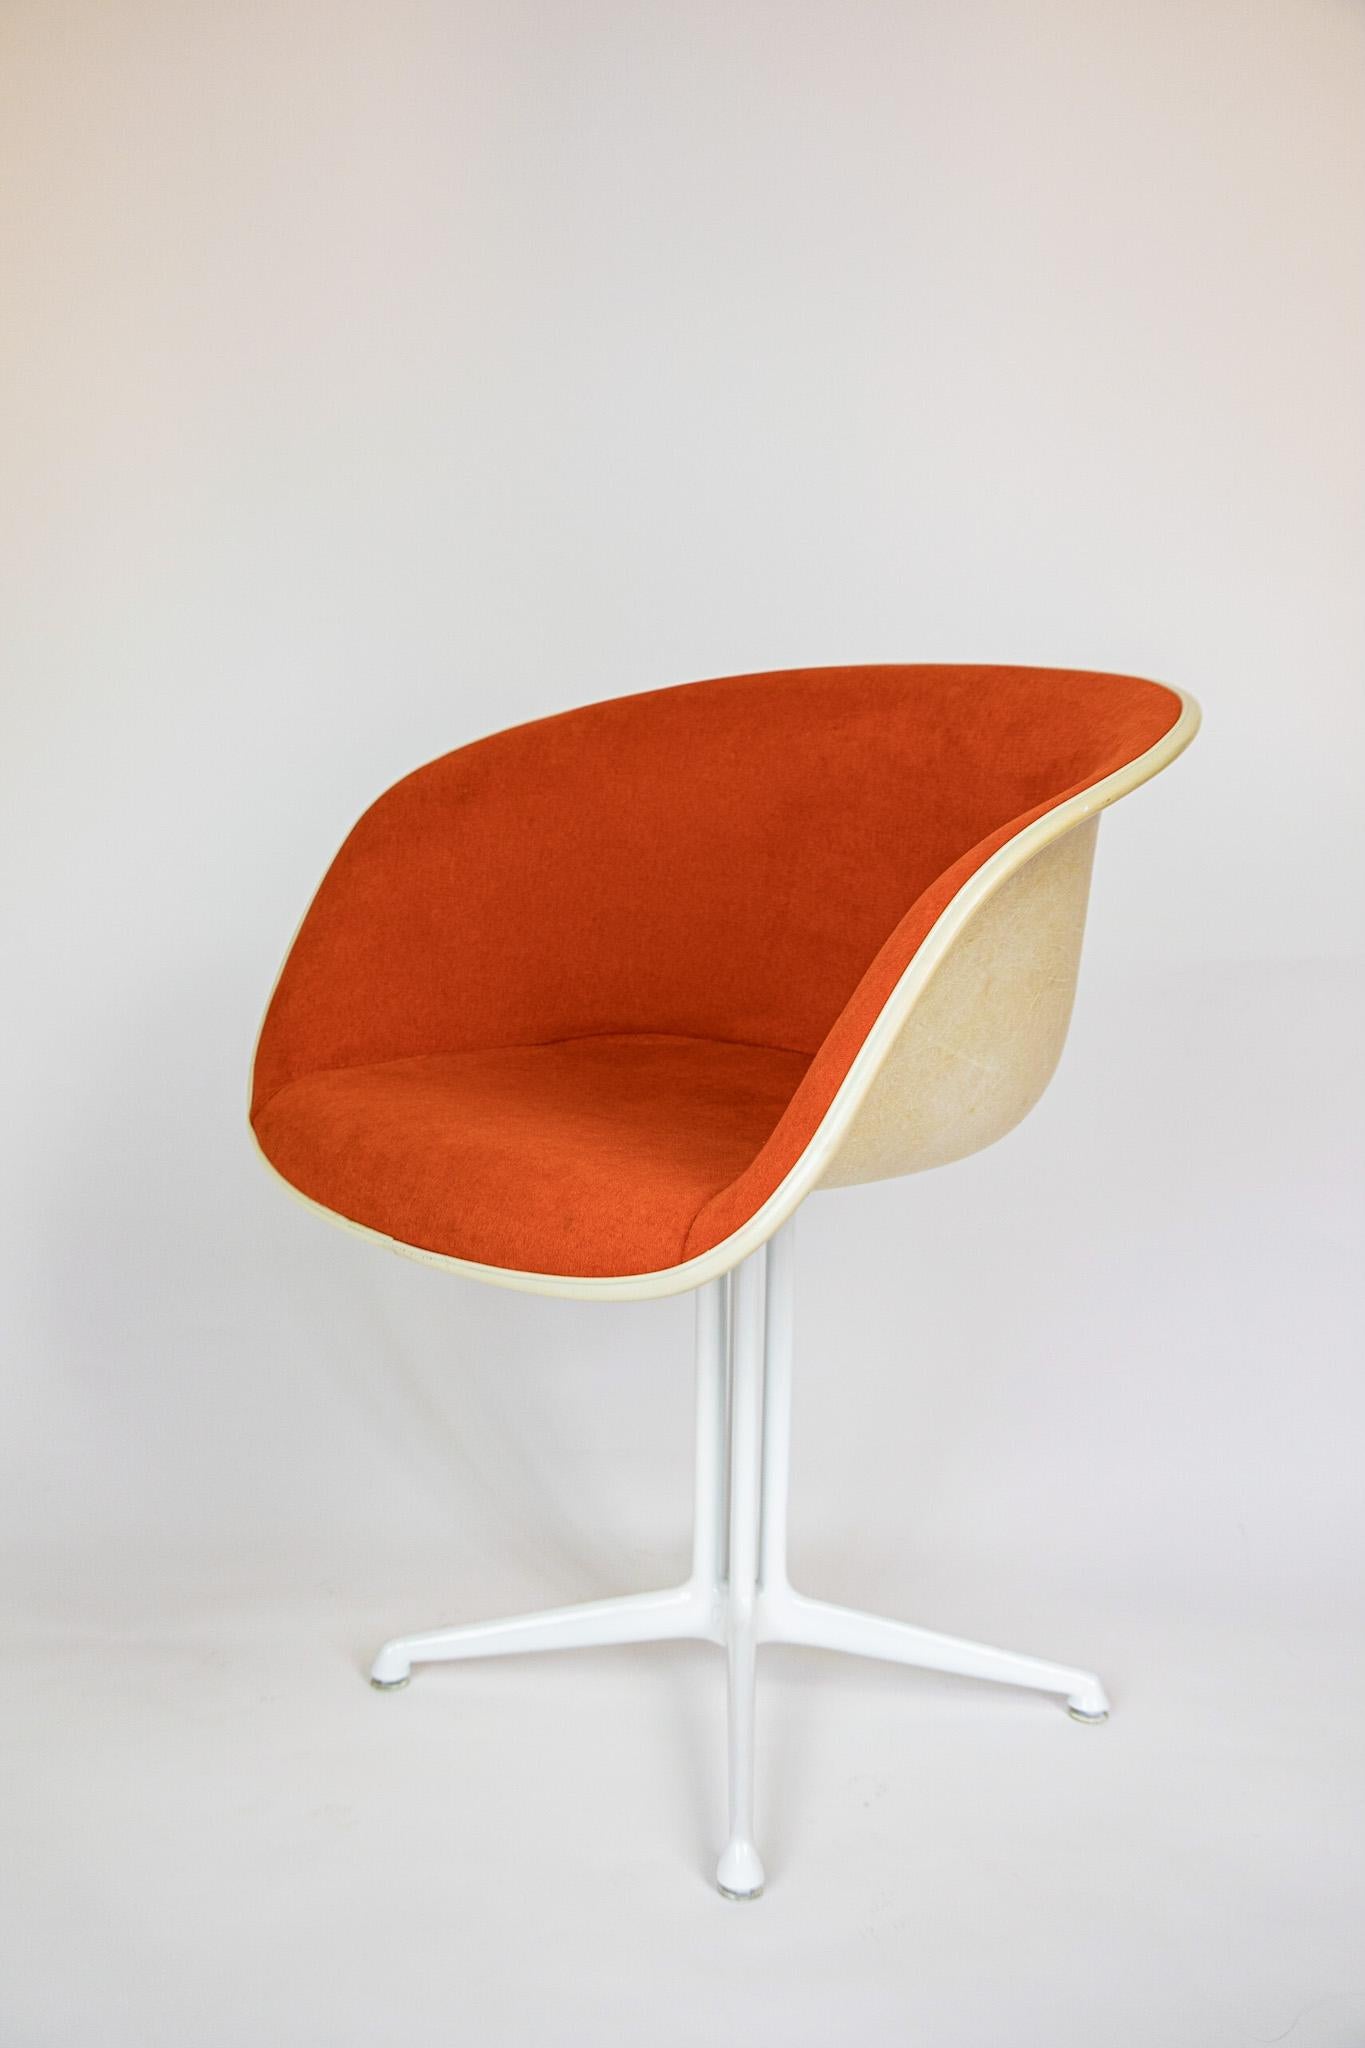 Painted Mid Century Dining Chair La Fonda by Eames for Vitra, Orange, Fiberglass, 1960s